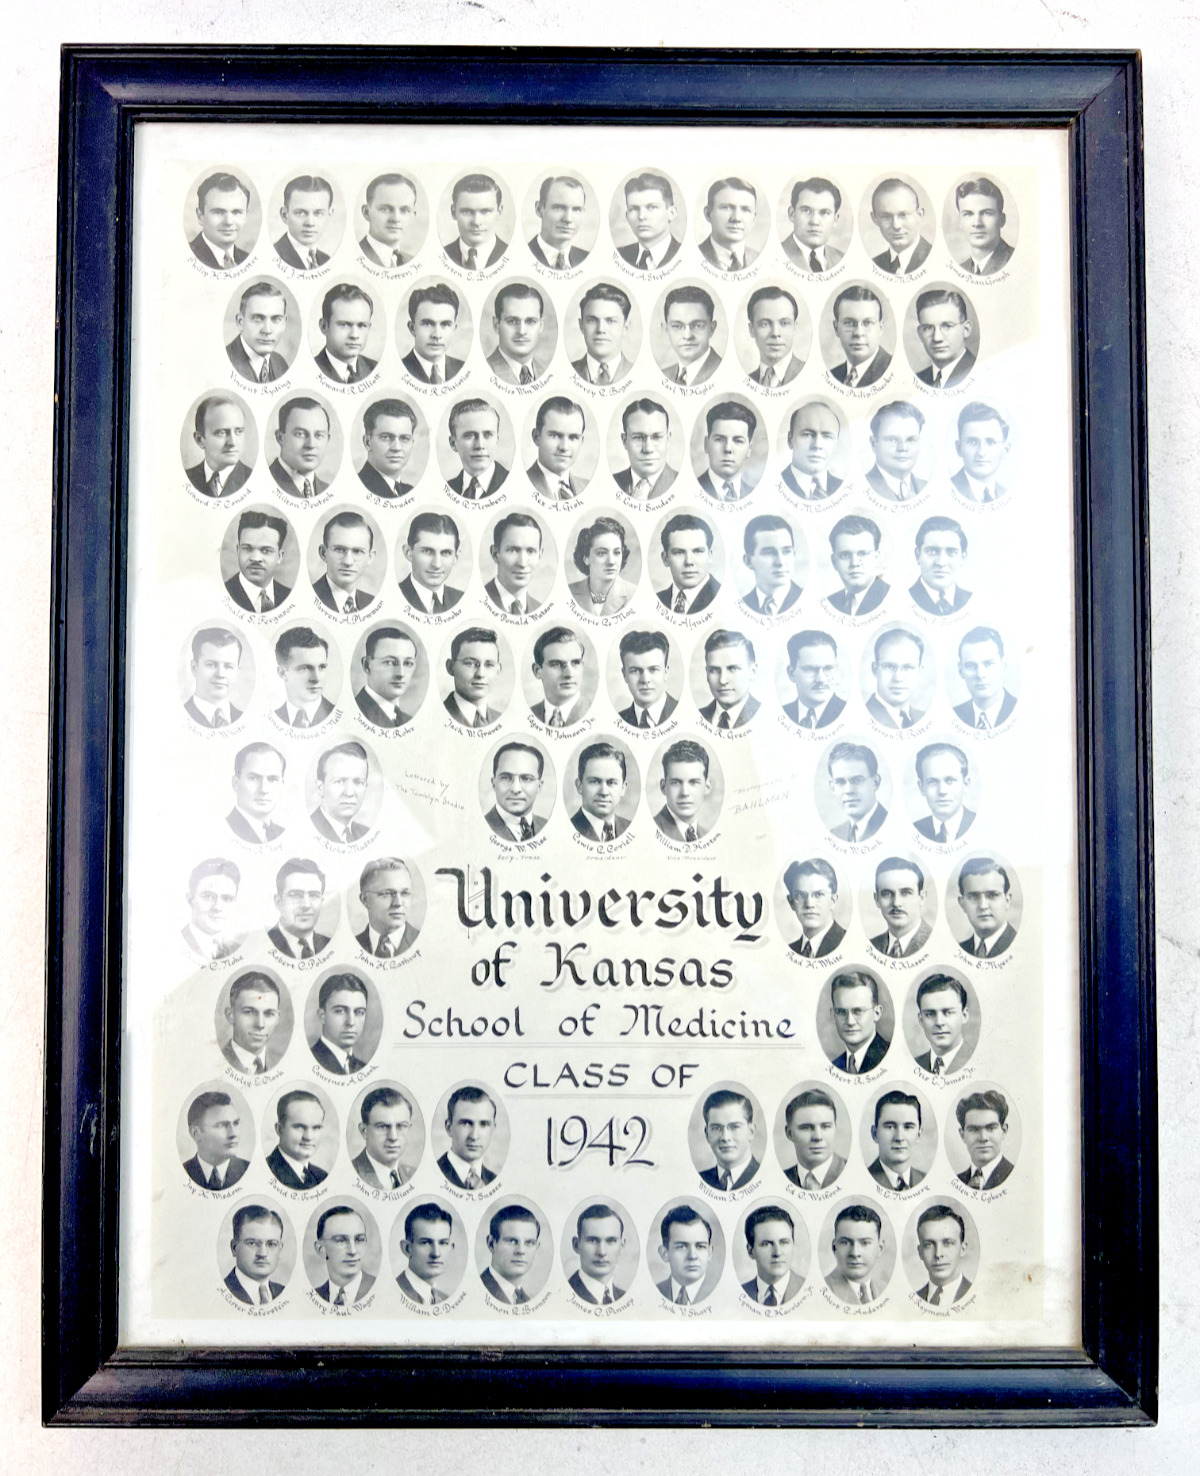 University of Kansas - School of Medicine - Class of 1942 Framed Picture